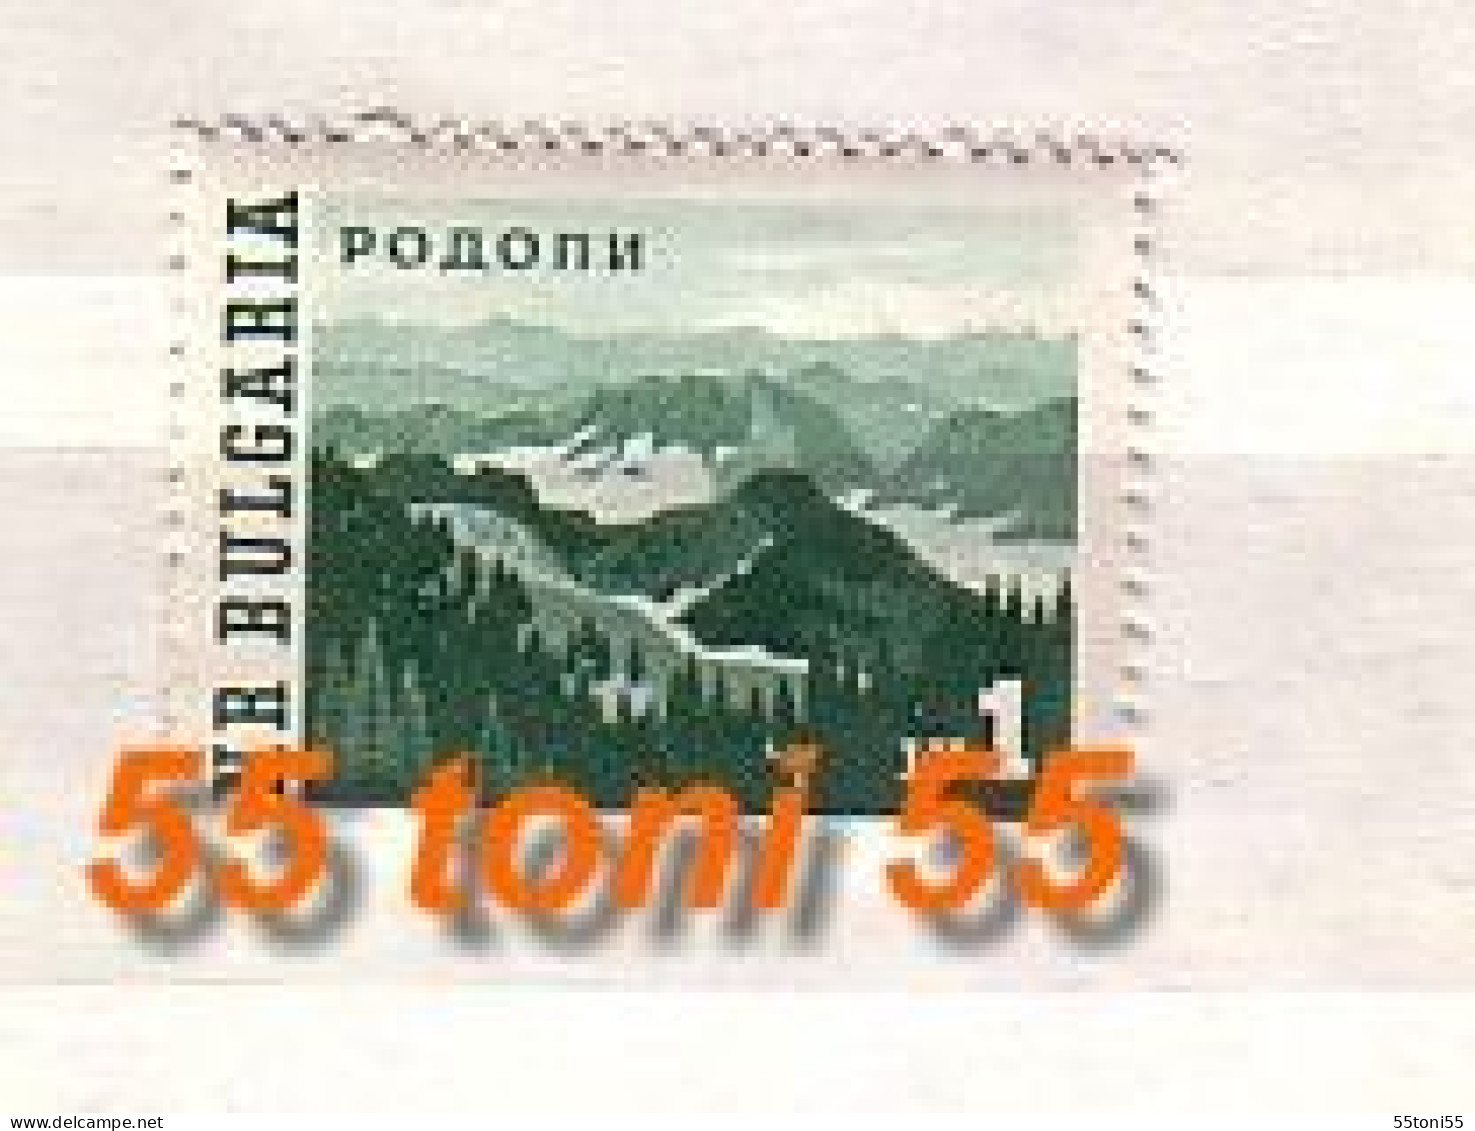 1962 Rhodope Mountain -  Nature  1v.-MNH  Bulgaria / Bulgarie - Unused Stamps